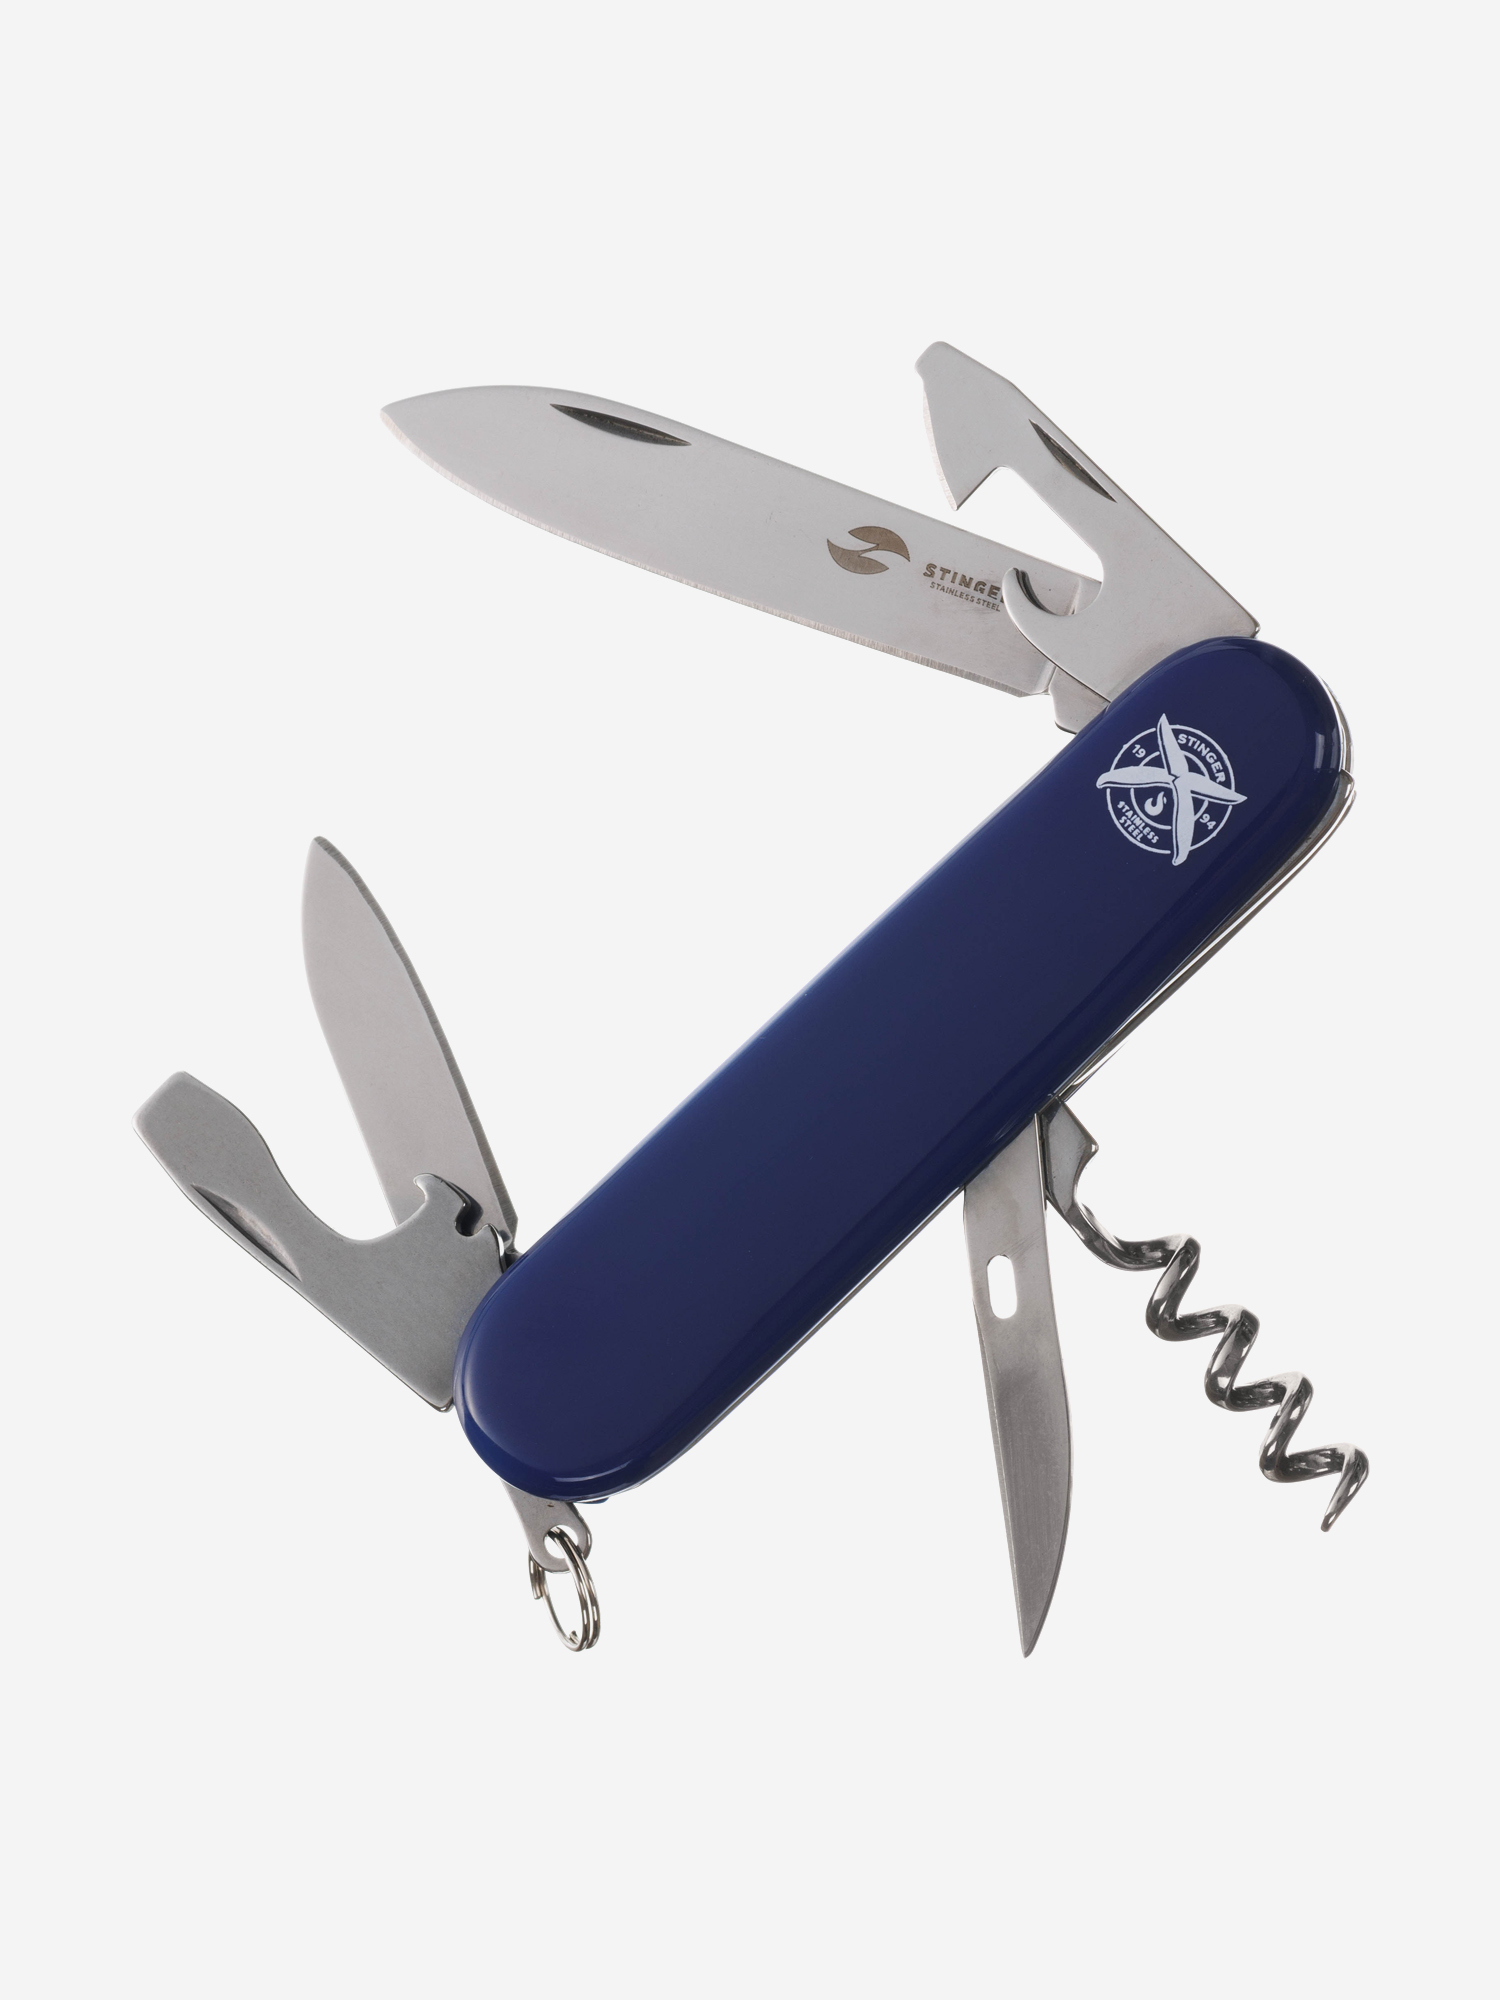 Нож перочинный Stinger, 90 мм, 11 функций, материал рукояти: АБС-пластик (синий), Синий нож перочинный stinger 90 мм 2 функции материал рукояти абс пластик синий синий